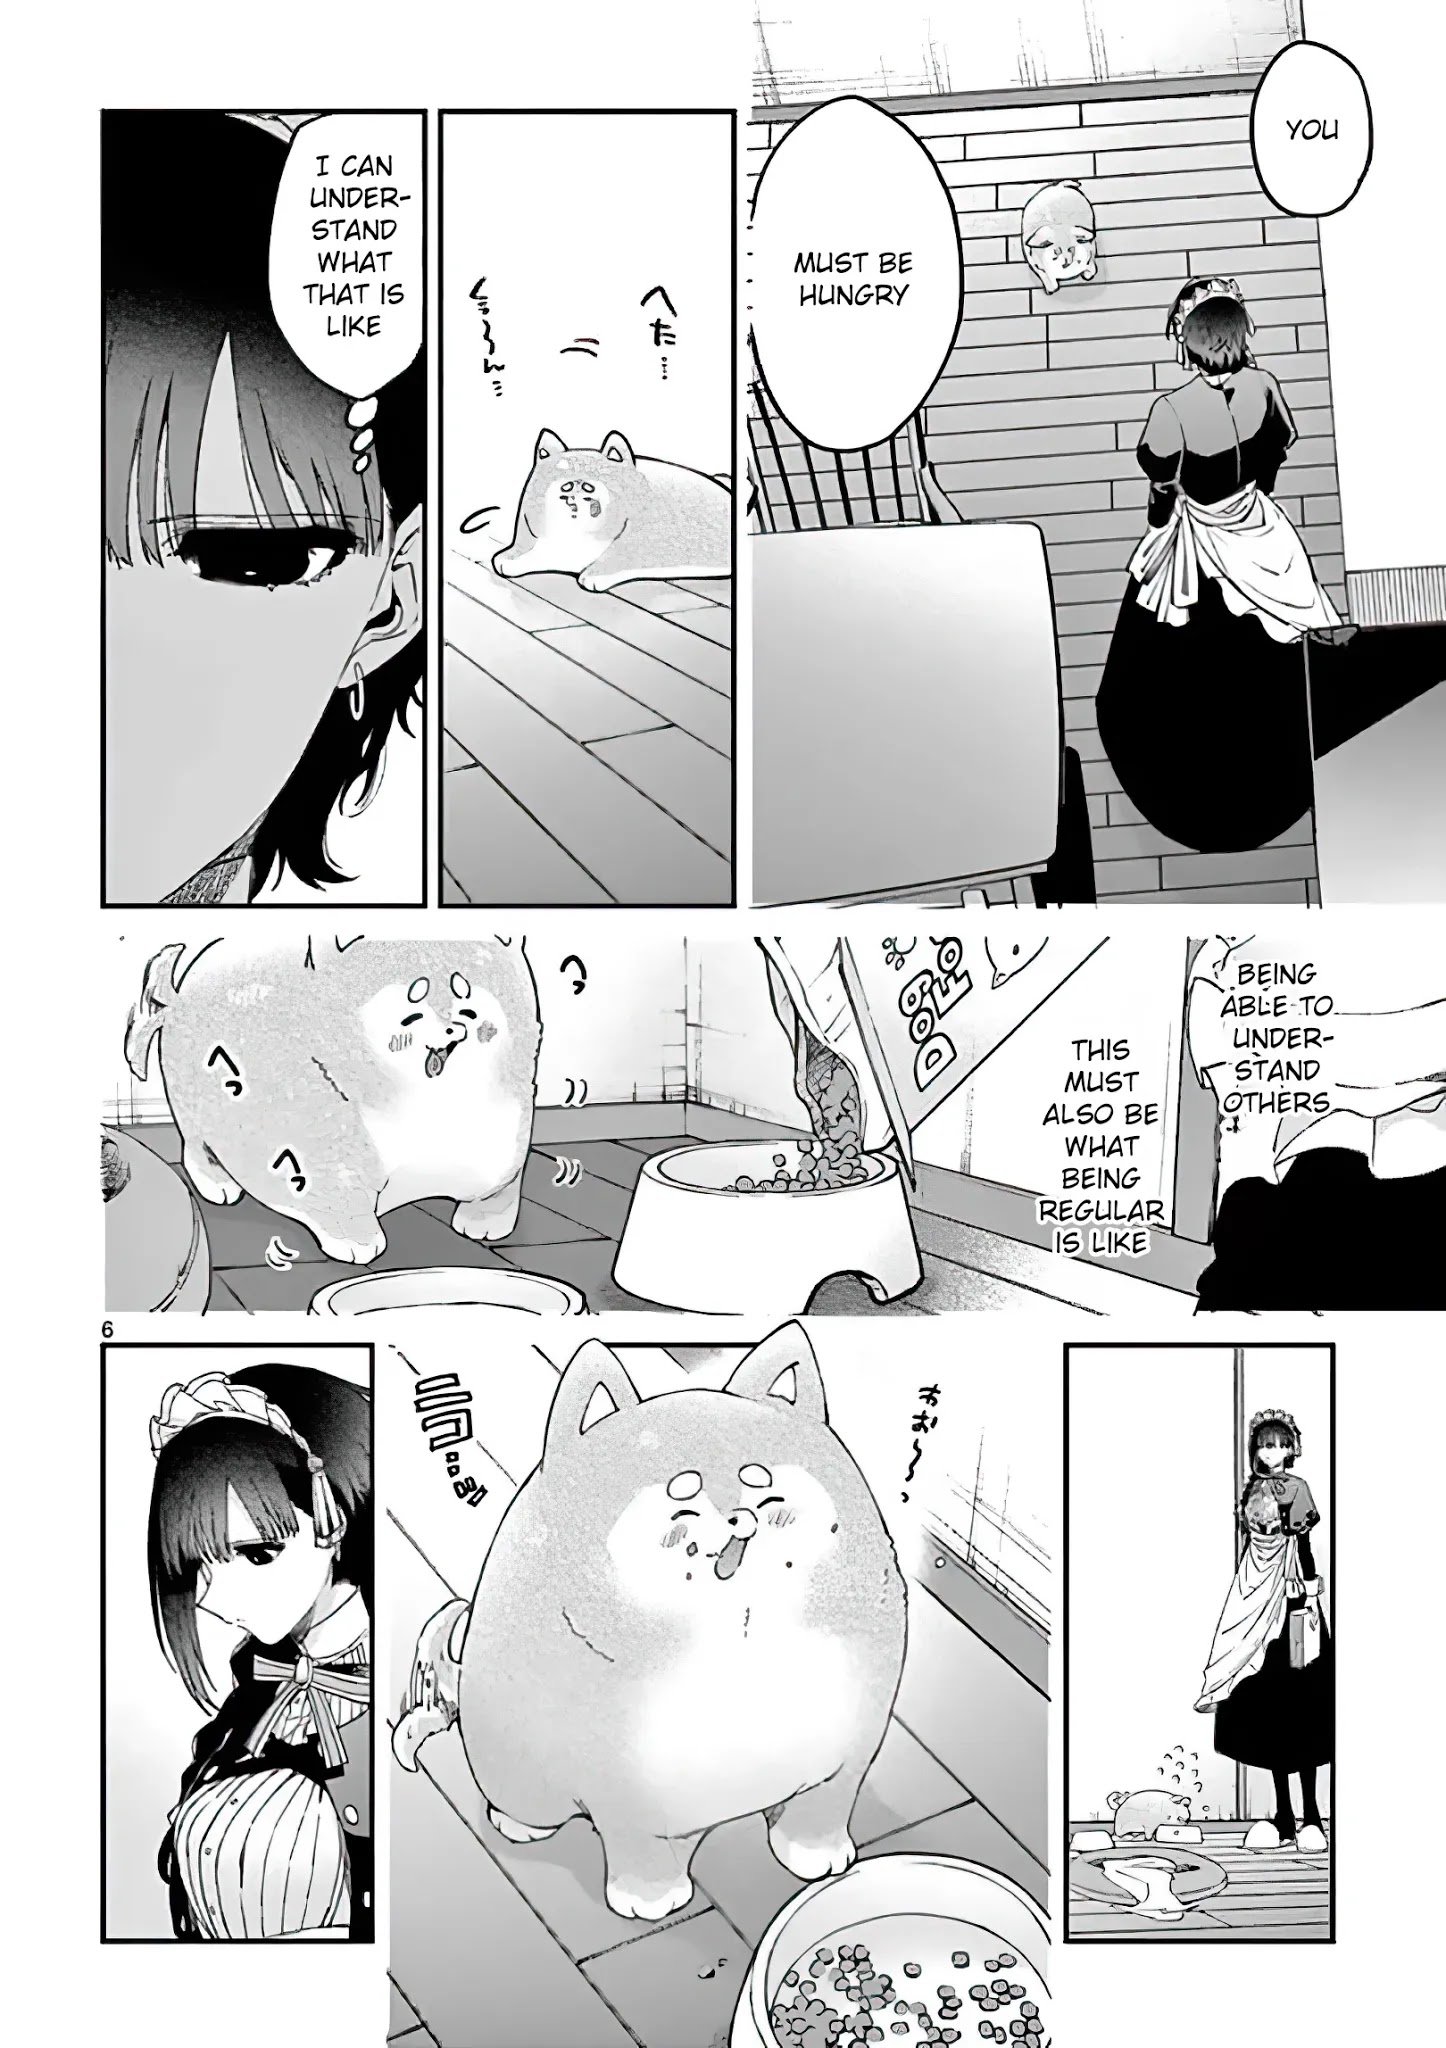 Kimi wa Meido-sama. (You are Ms. Servant.) #6 / Comic – MOYASHI